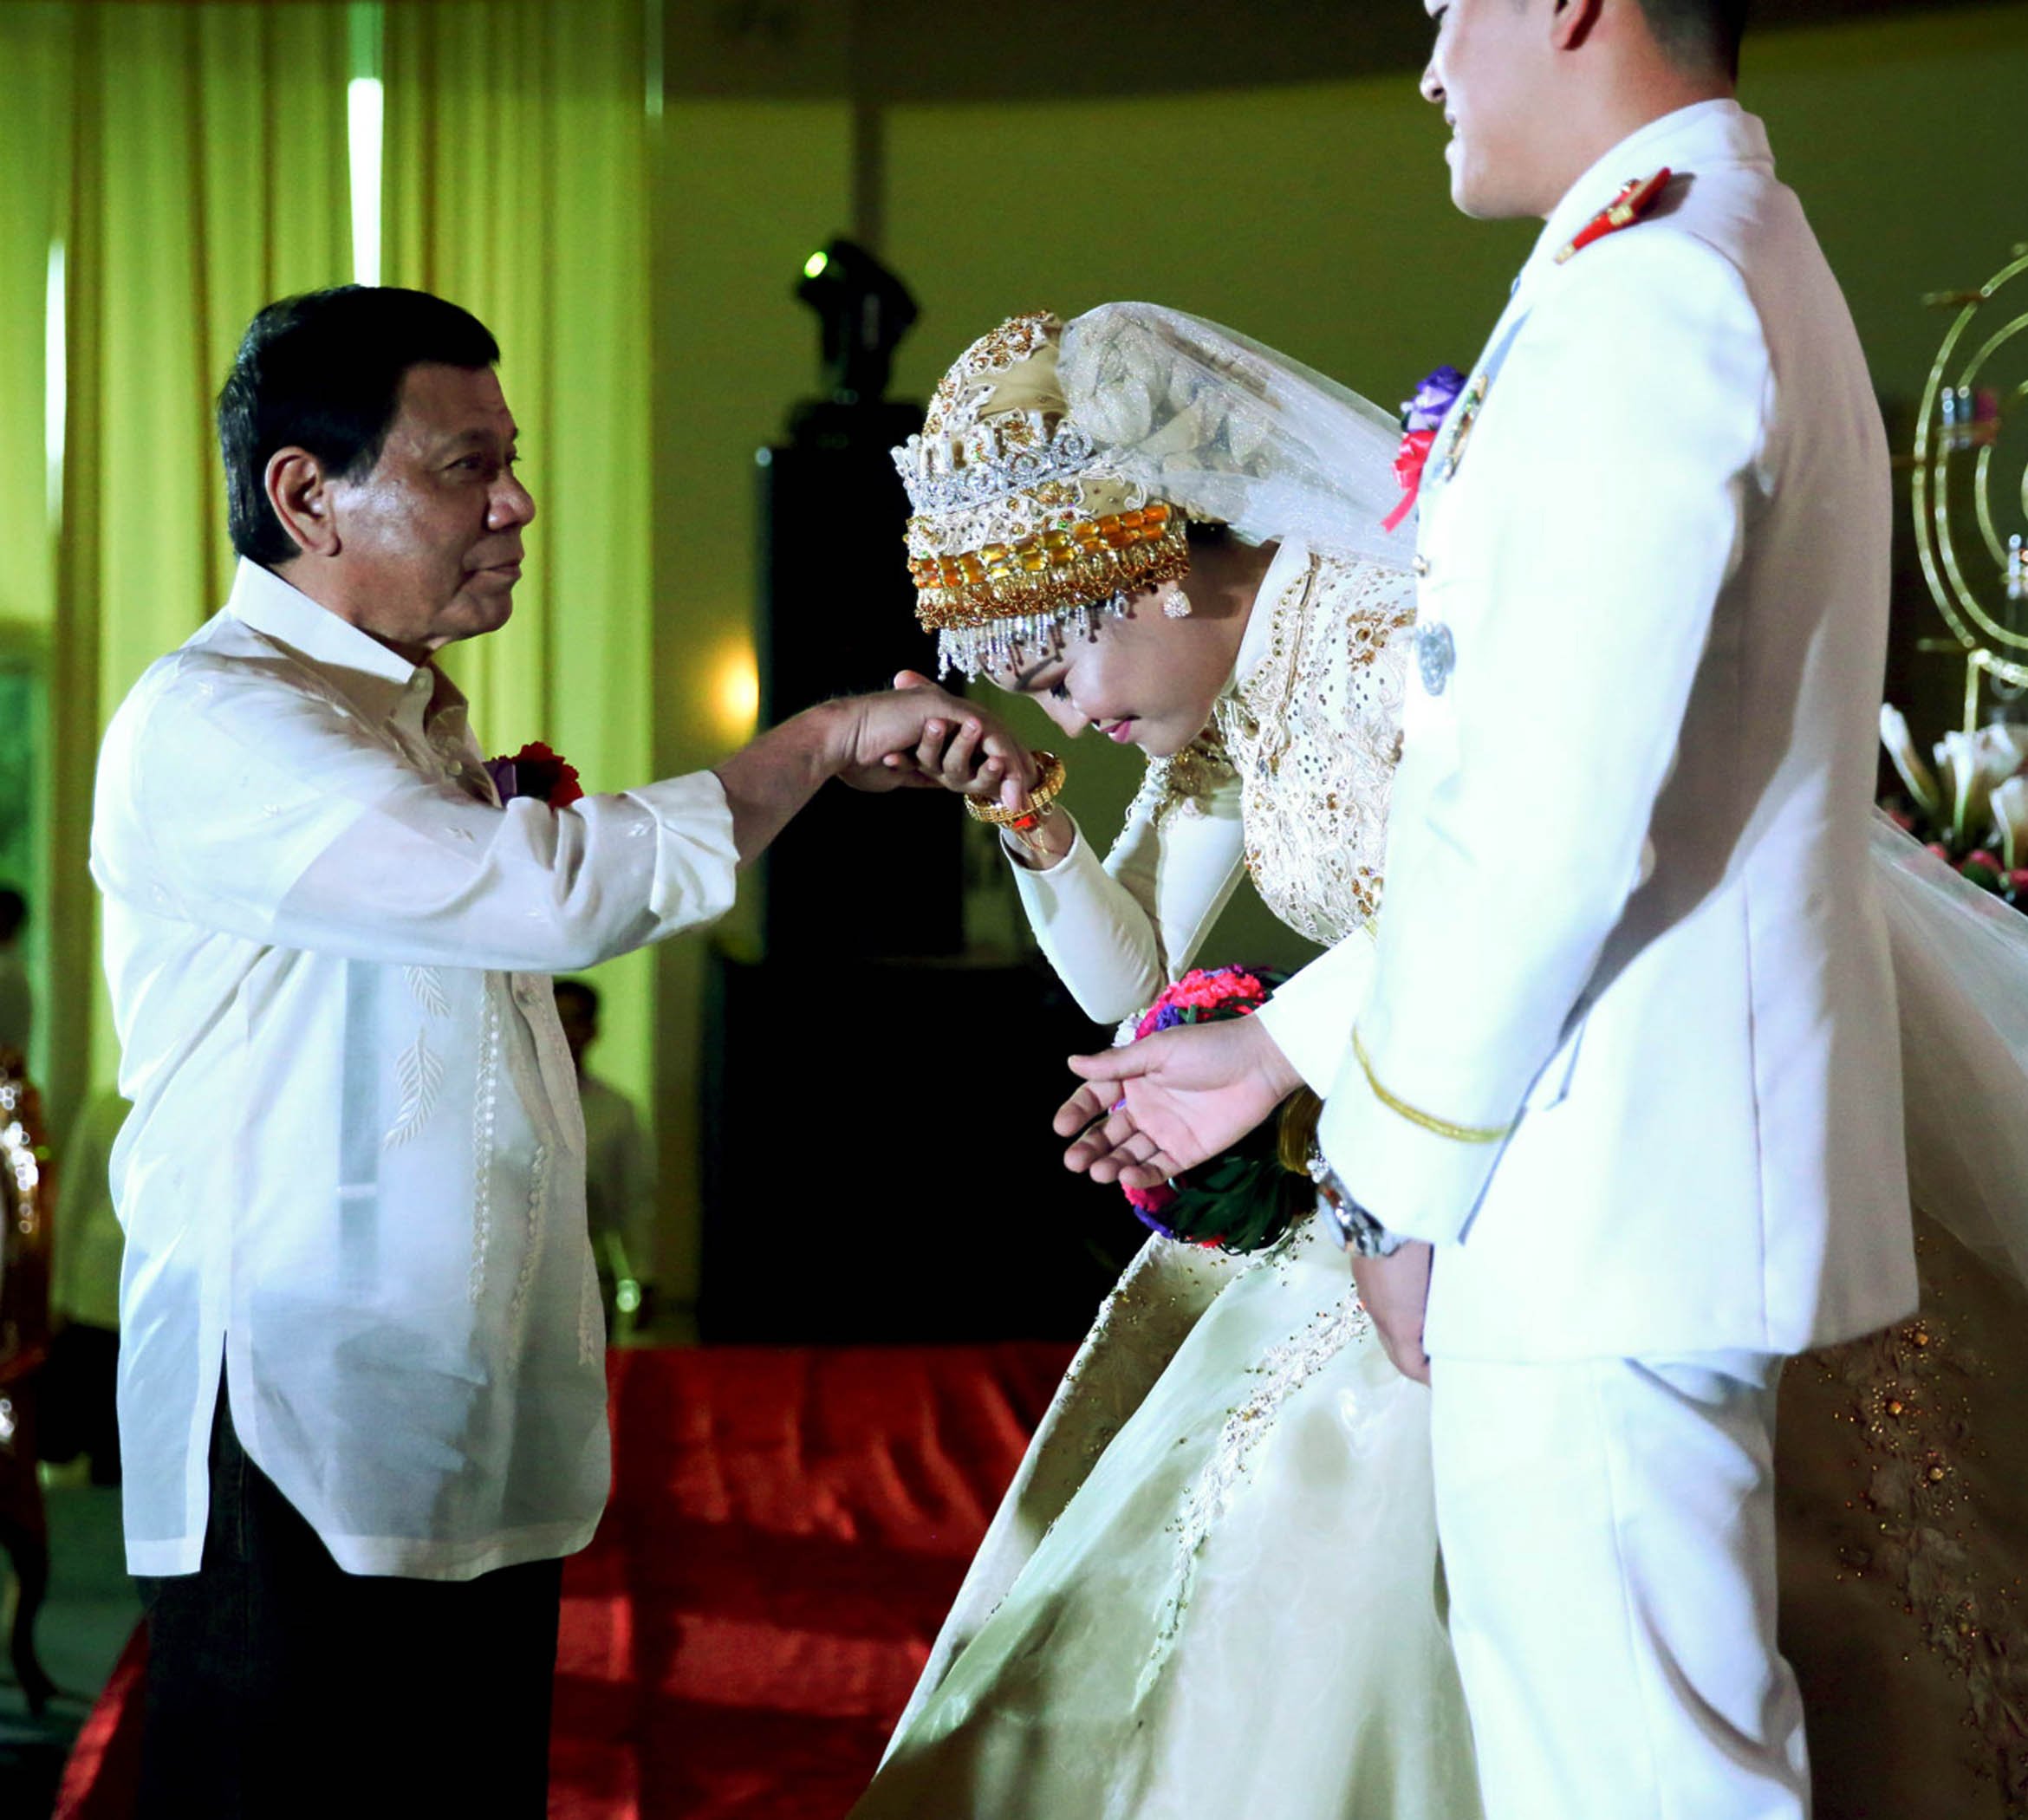 Pres. Duterte is one of the principal sponsors for the Kinang-Hosmillo nuptials in Zamboanga City